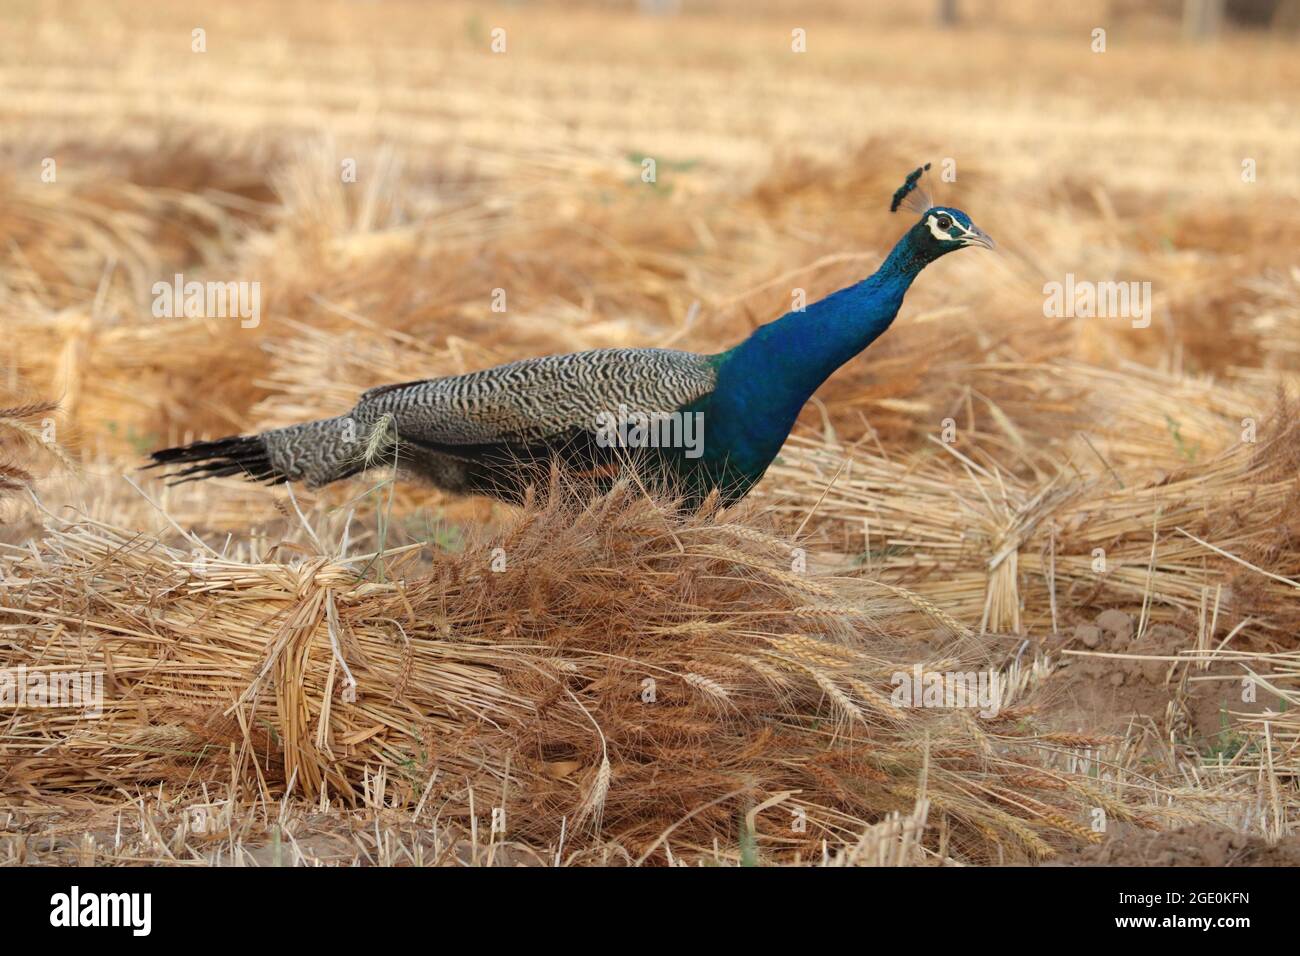 A closeup shot of a male peacock on the farm Stock Photo